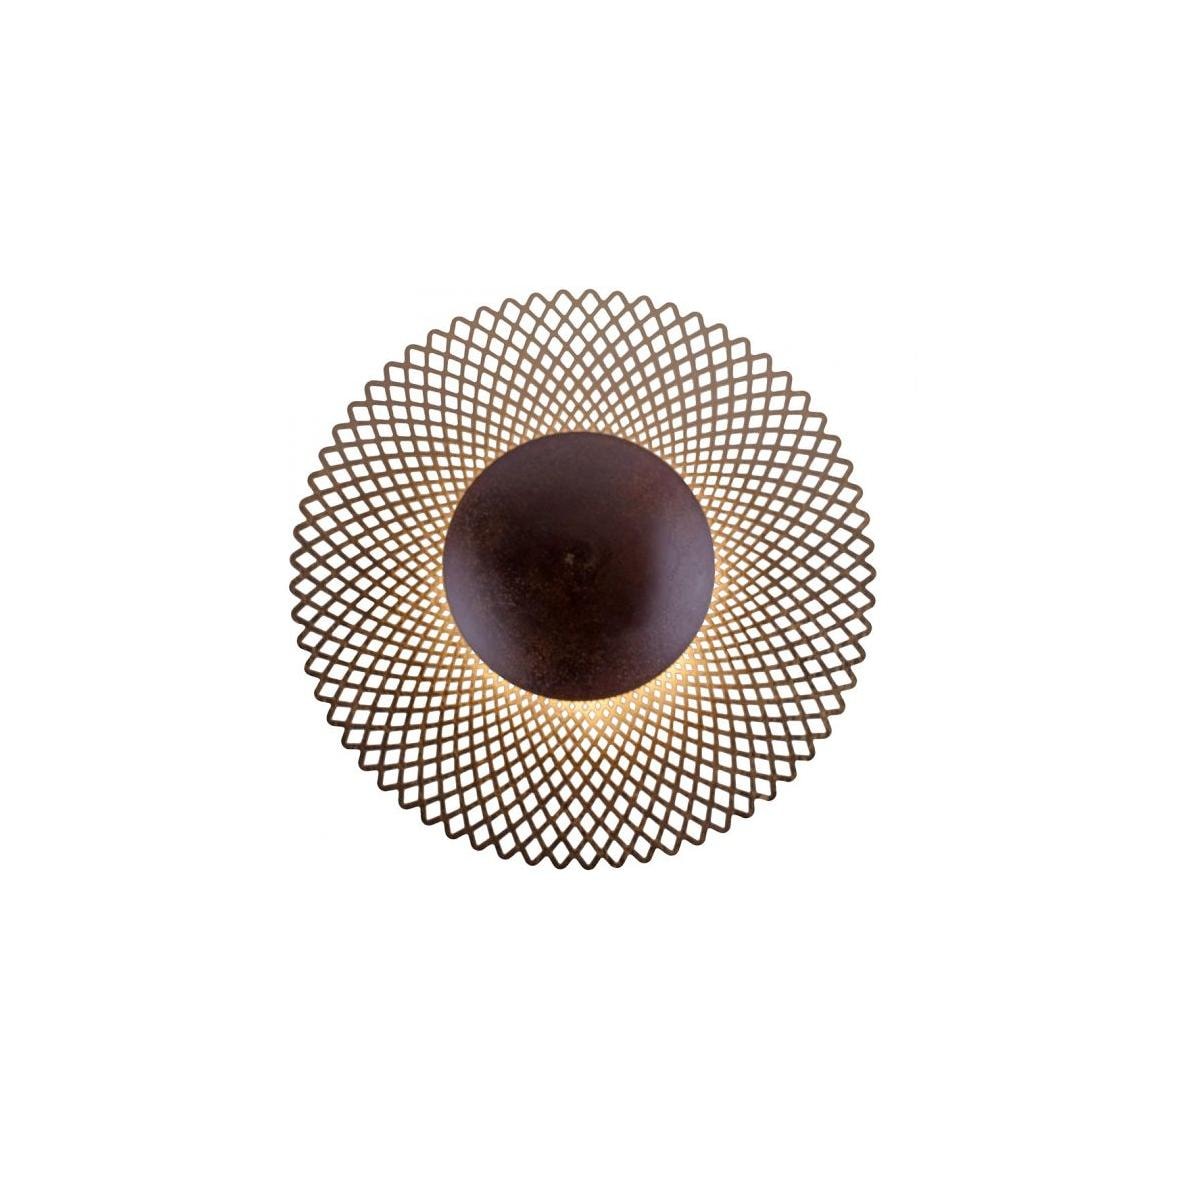 Paul Neuhaus LED Deckenleuchte, rost-gold, 2250lm Memory Wagner Funktion, indirekt, 18W, (6551-48) blendfrei, Elektroshop dimmbar